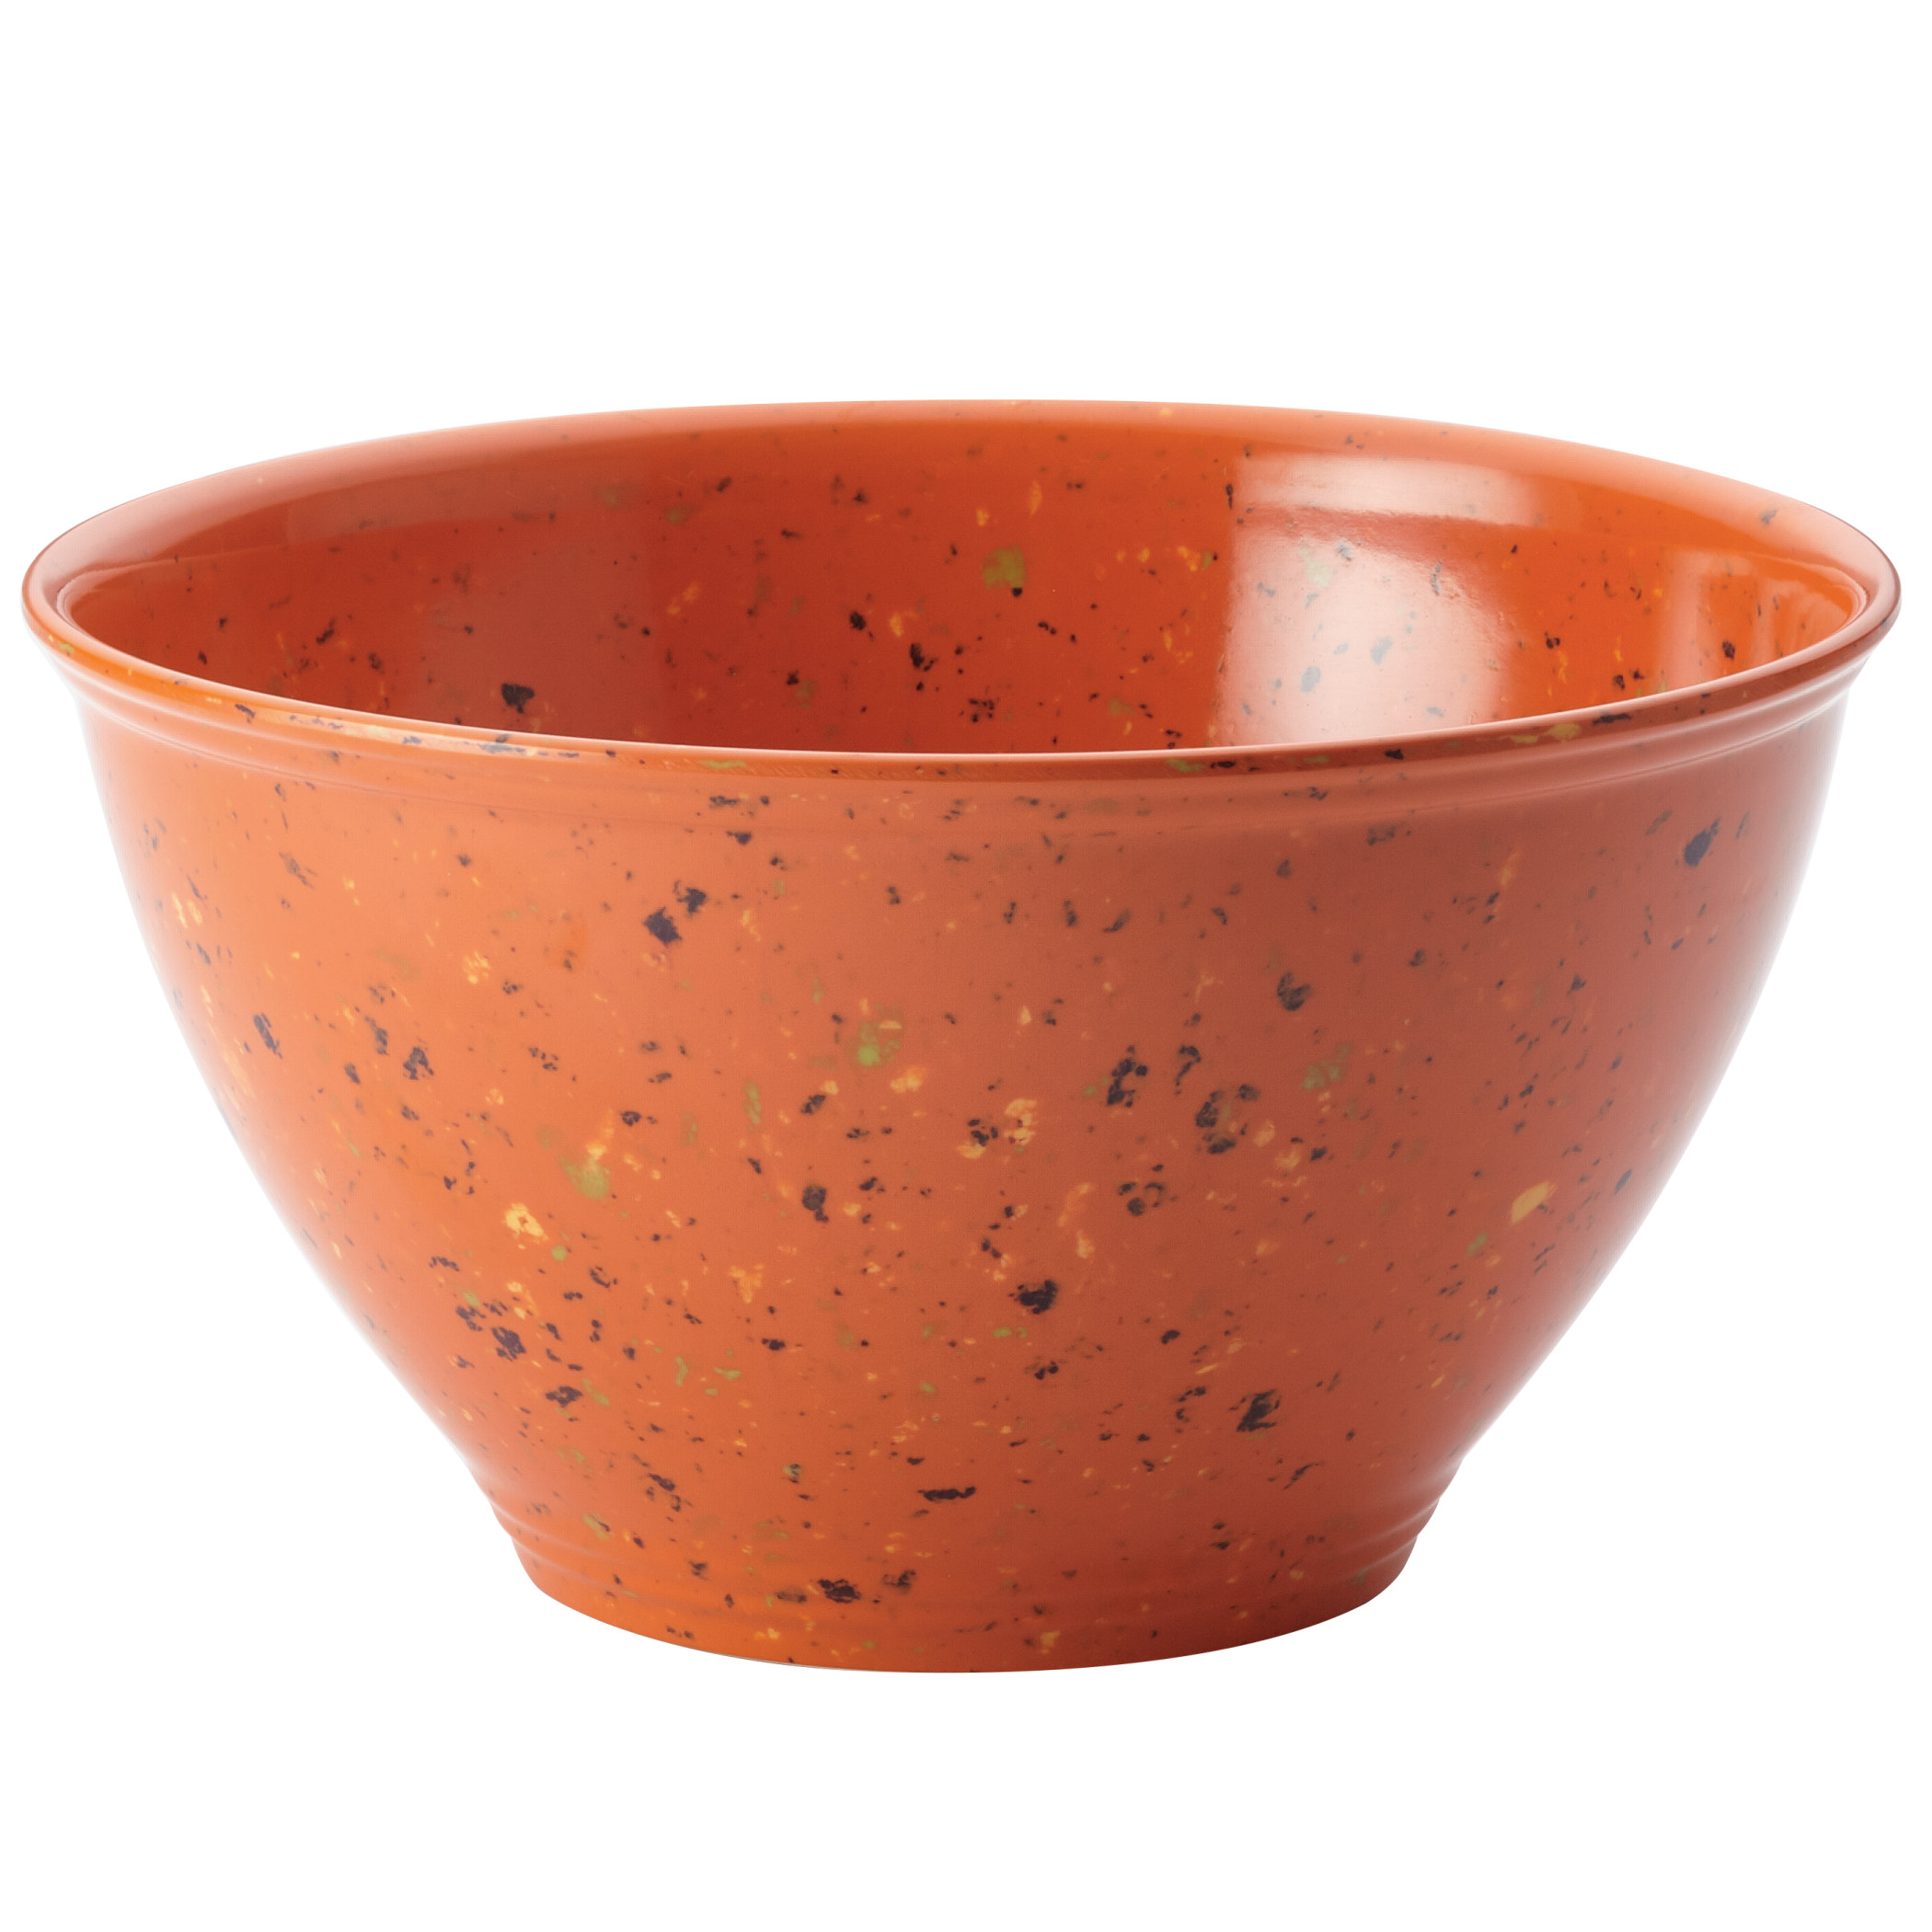 Rachael Ray 4 Quart Melamine Garbage Bowl, Orange - image 1 of 10